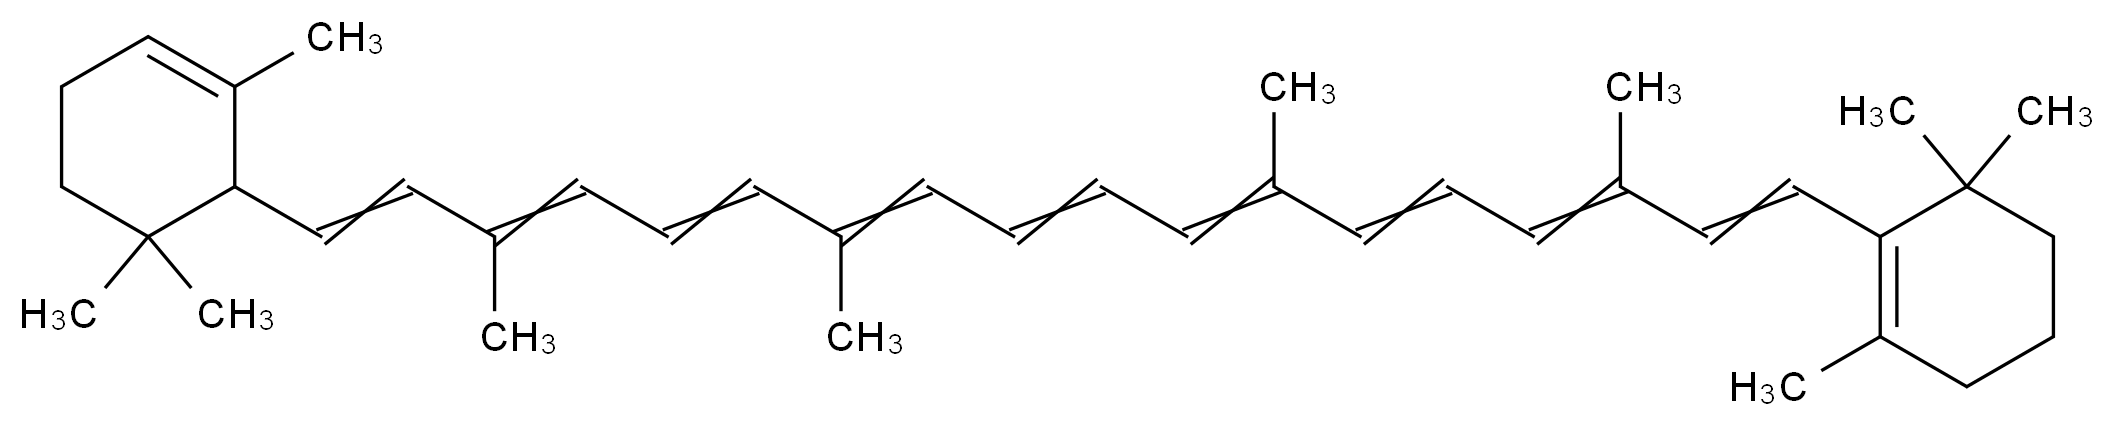 Alpha-Carotene_分子结构_CAS_7488-99-5)